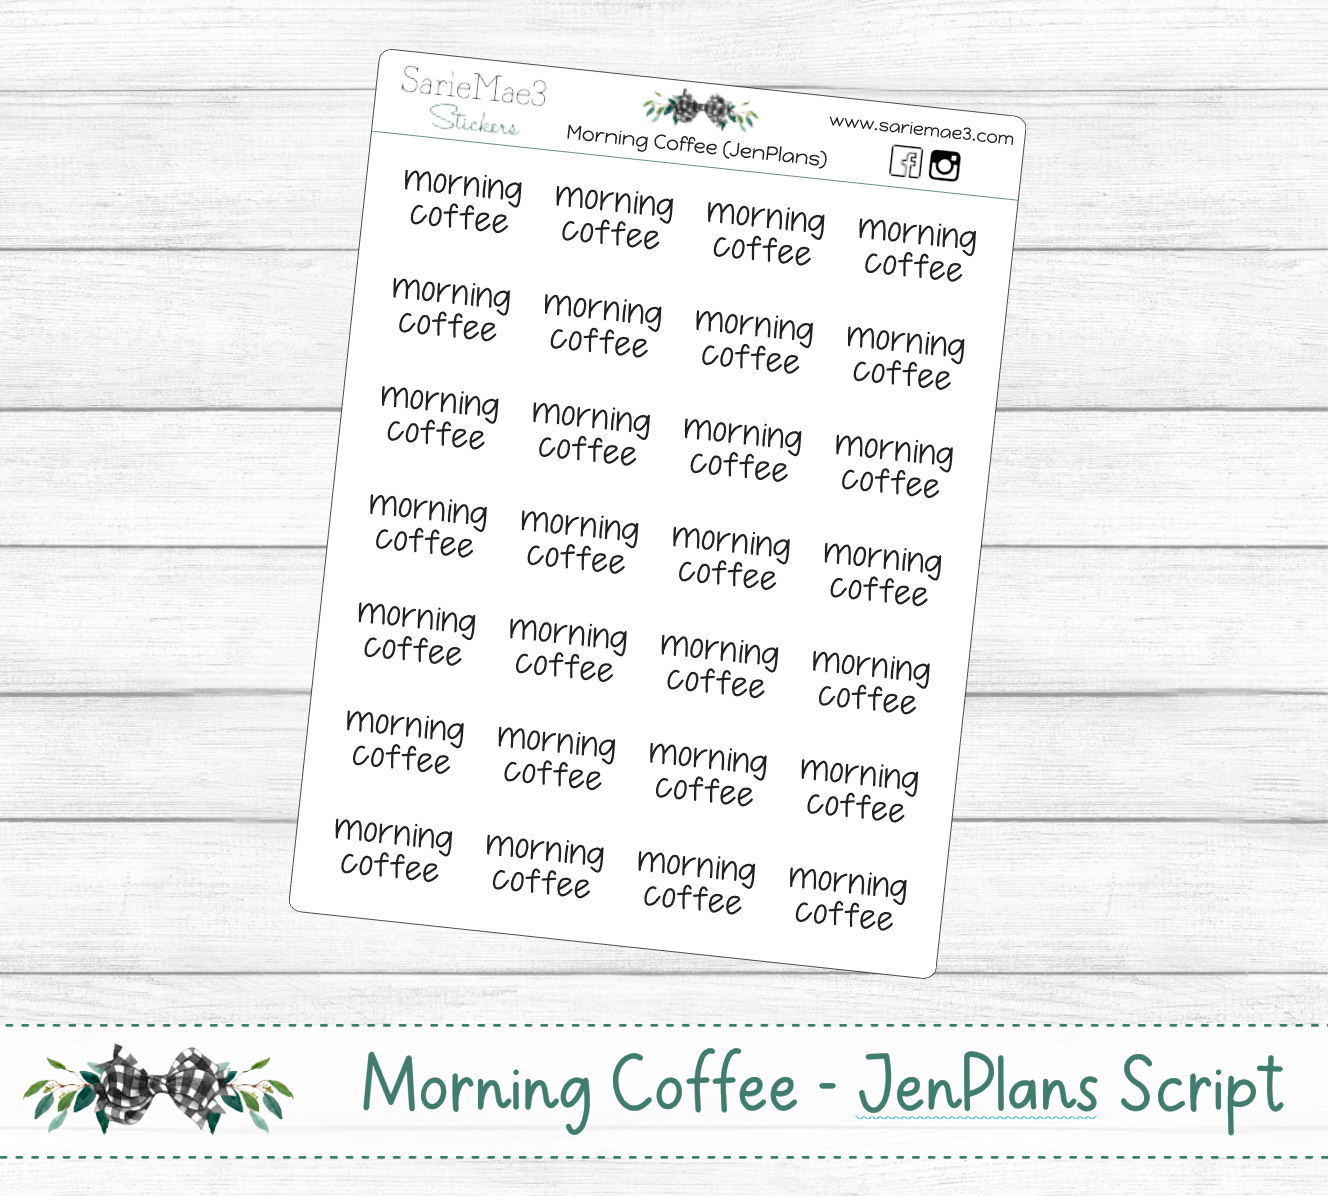 Morning Coffee (JenPlans)